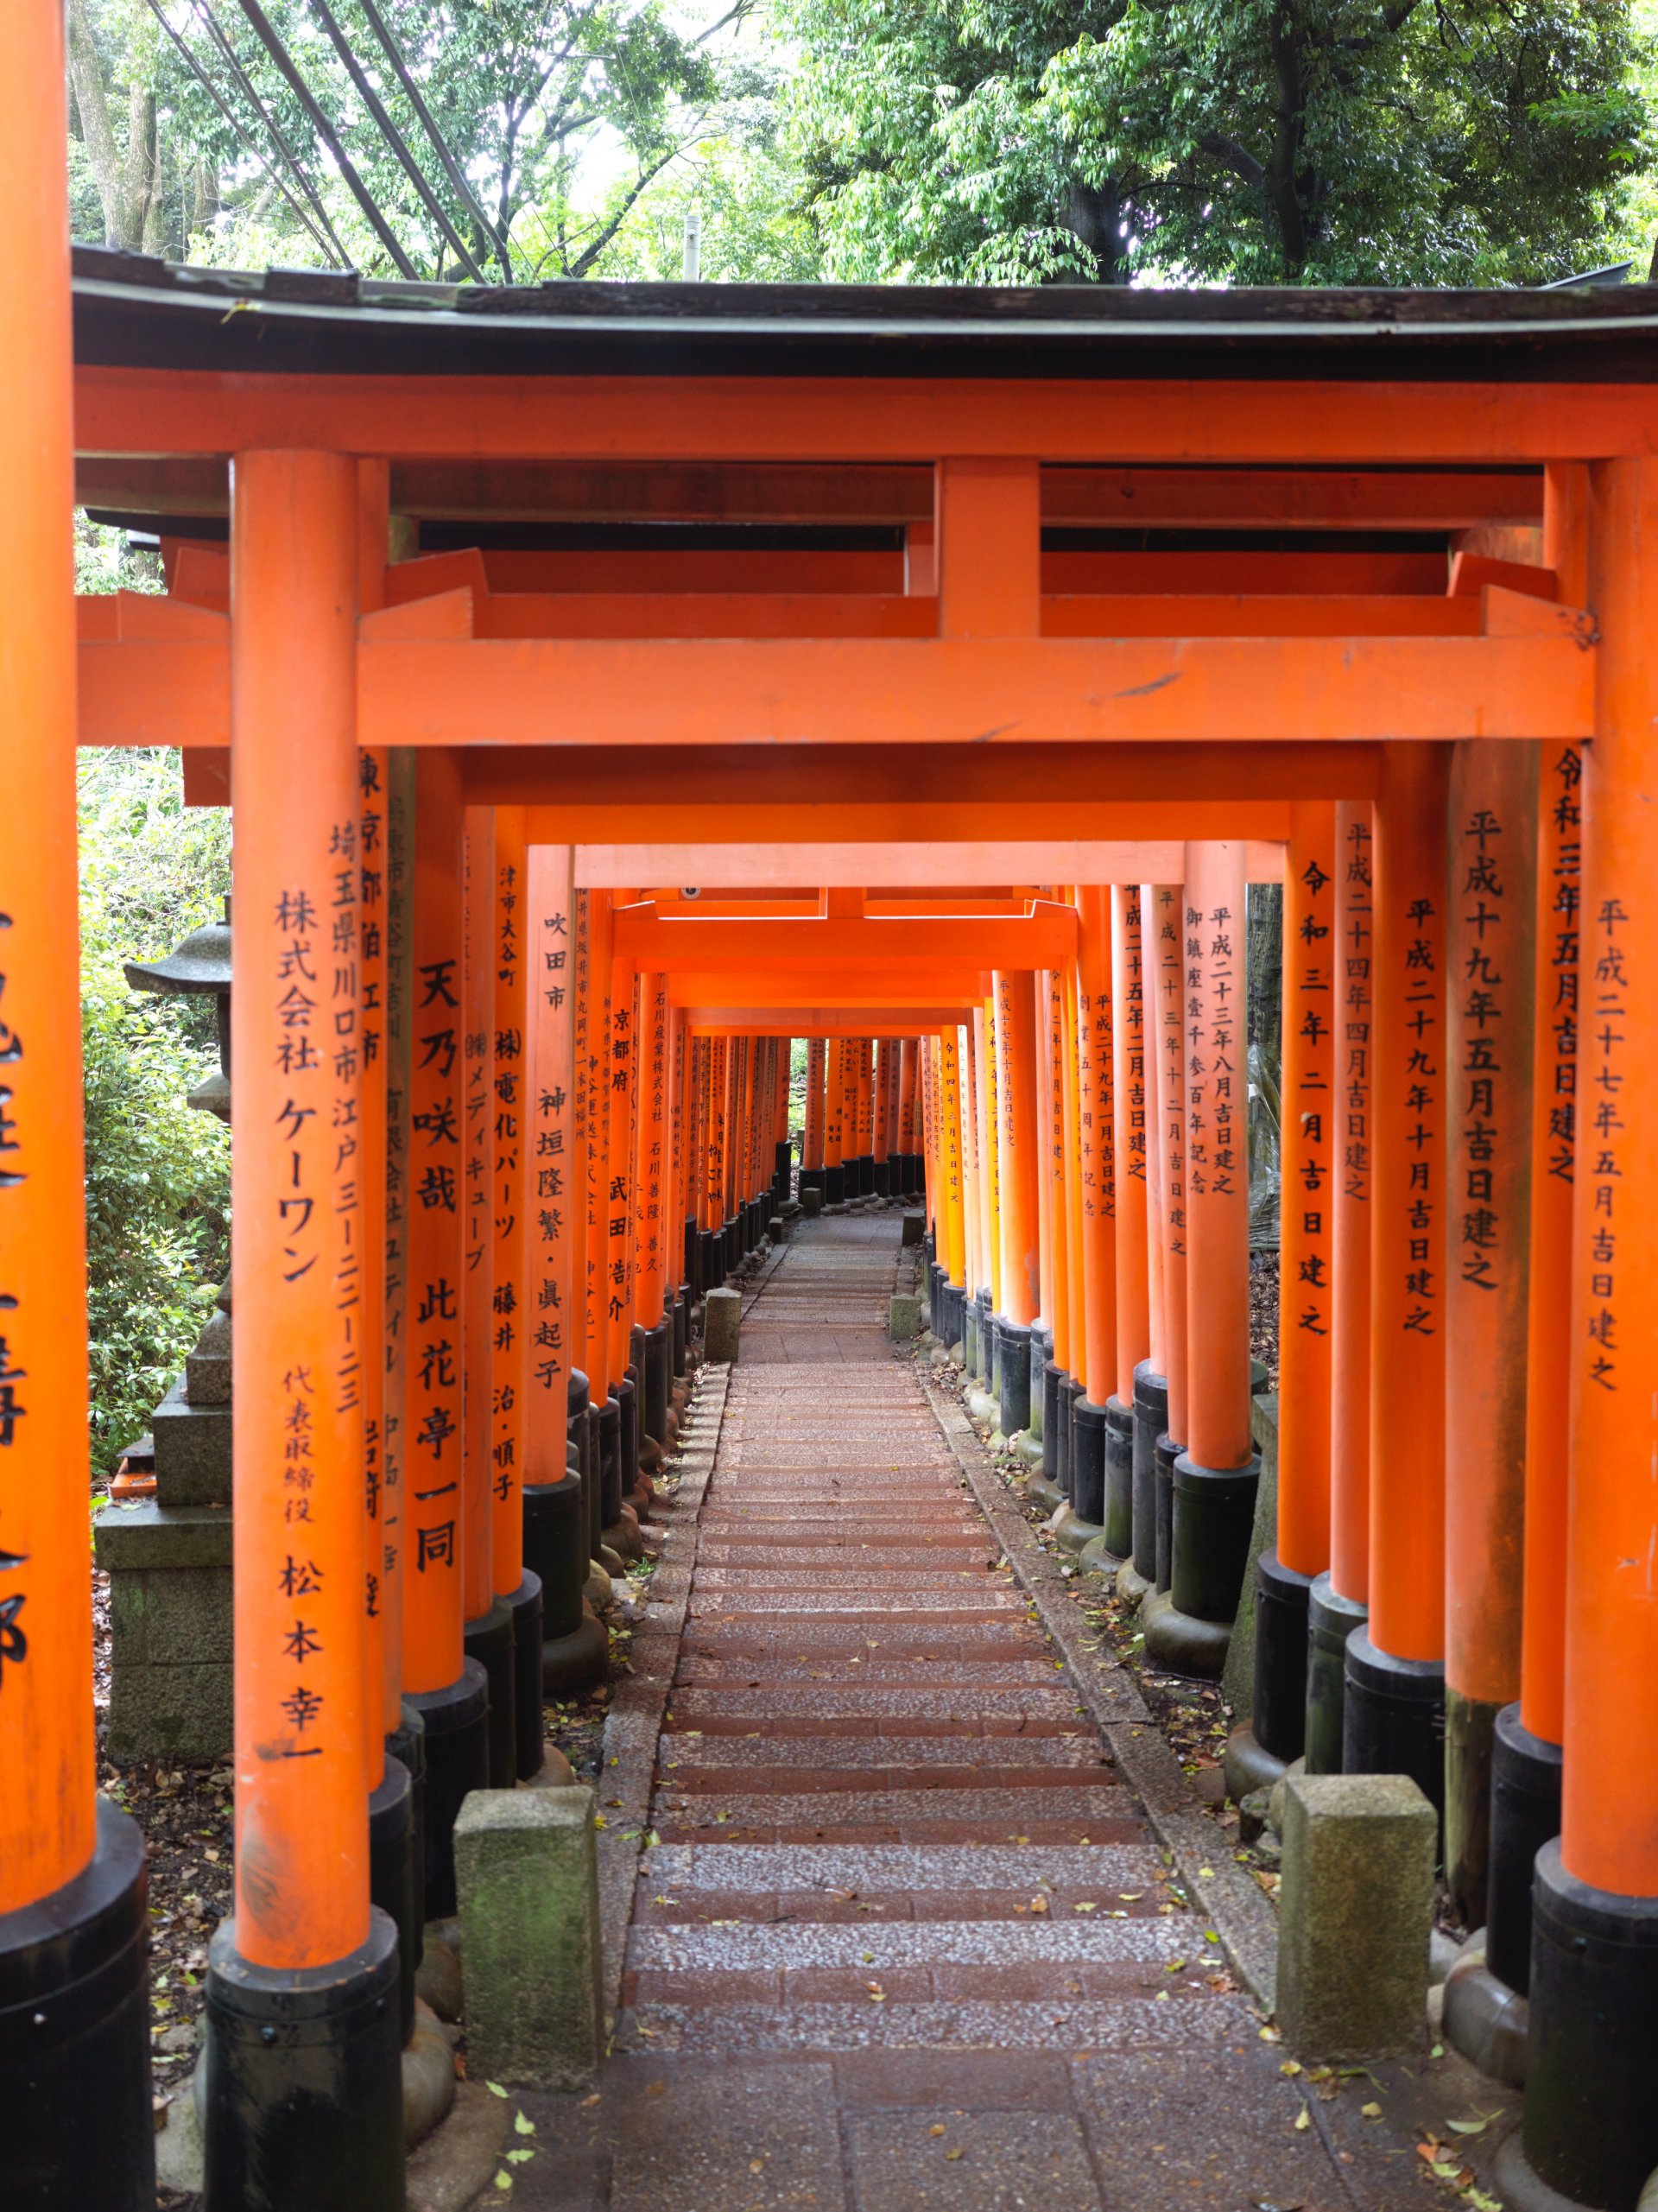 Torii gates in Japan